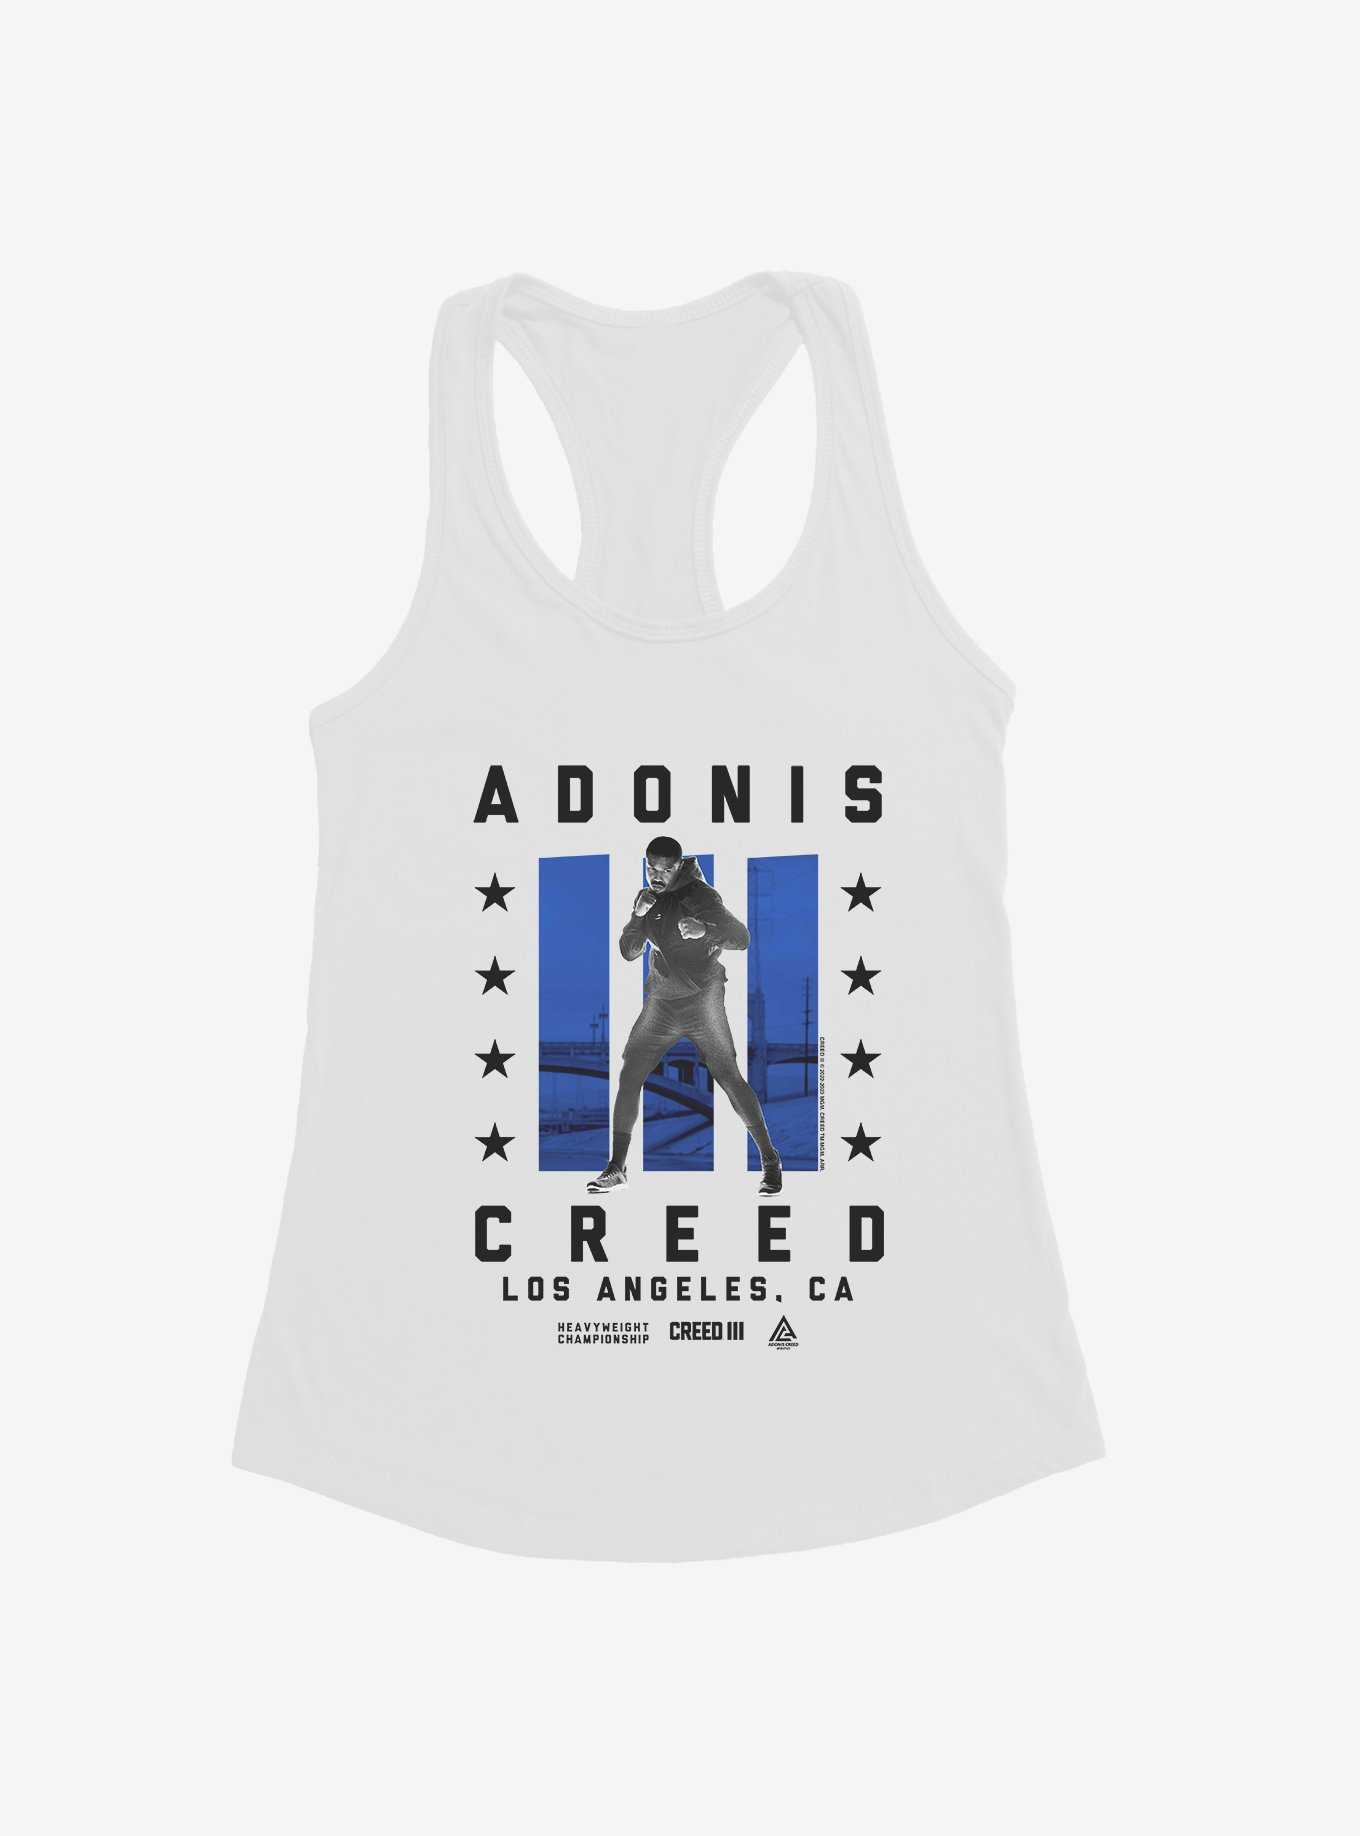 Creed III Adonis Creed LA Heavyweight Championship Girls Tank, , hi-res